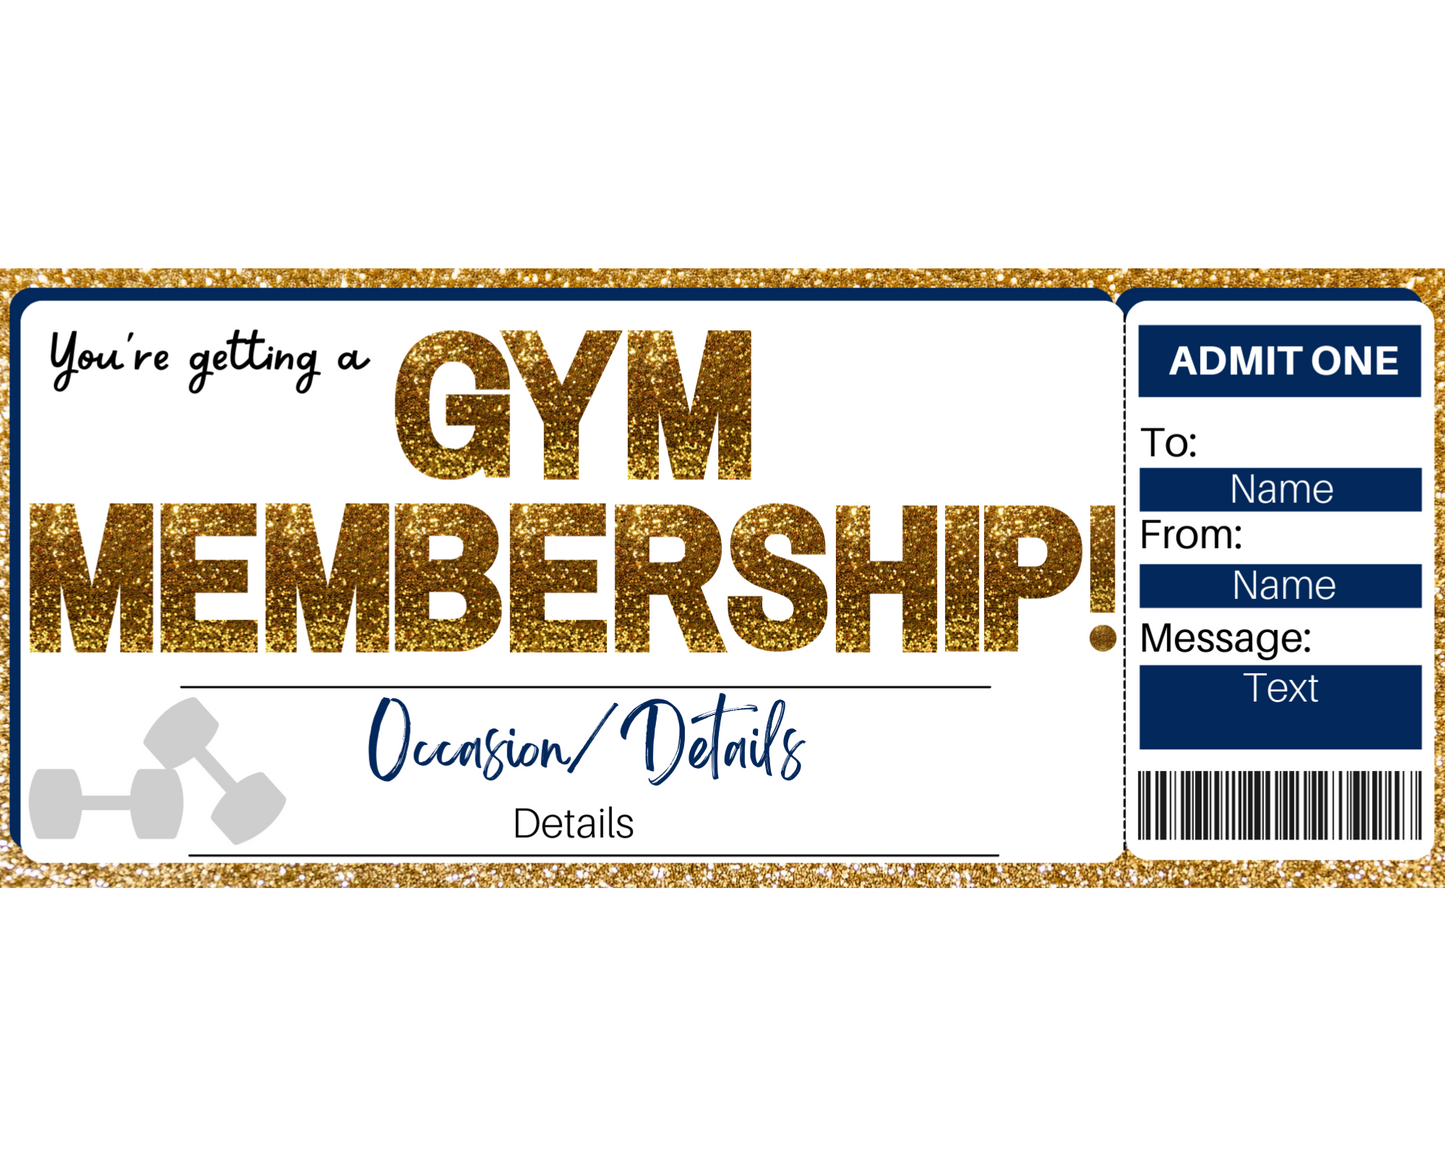 Gym Membership Gift Ticket Template